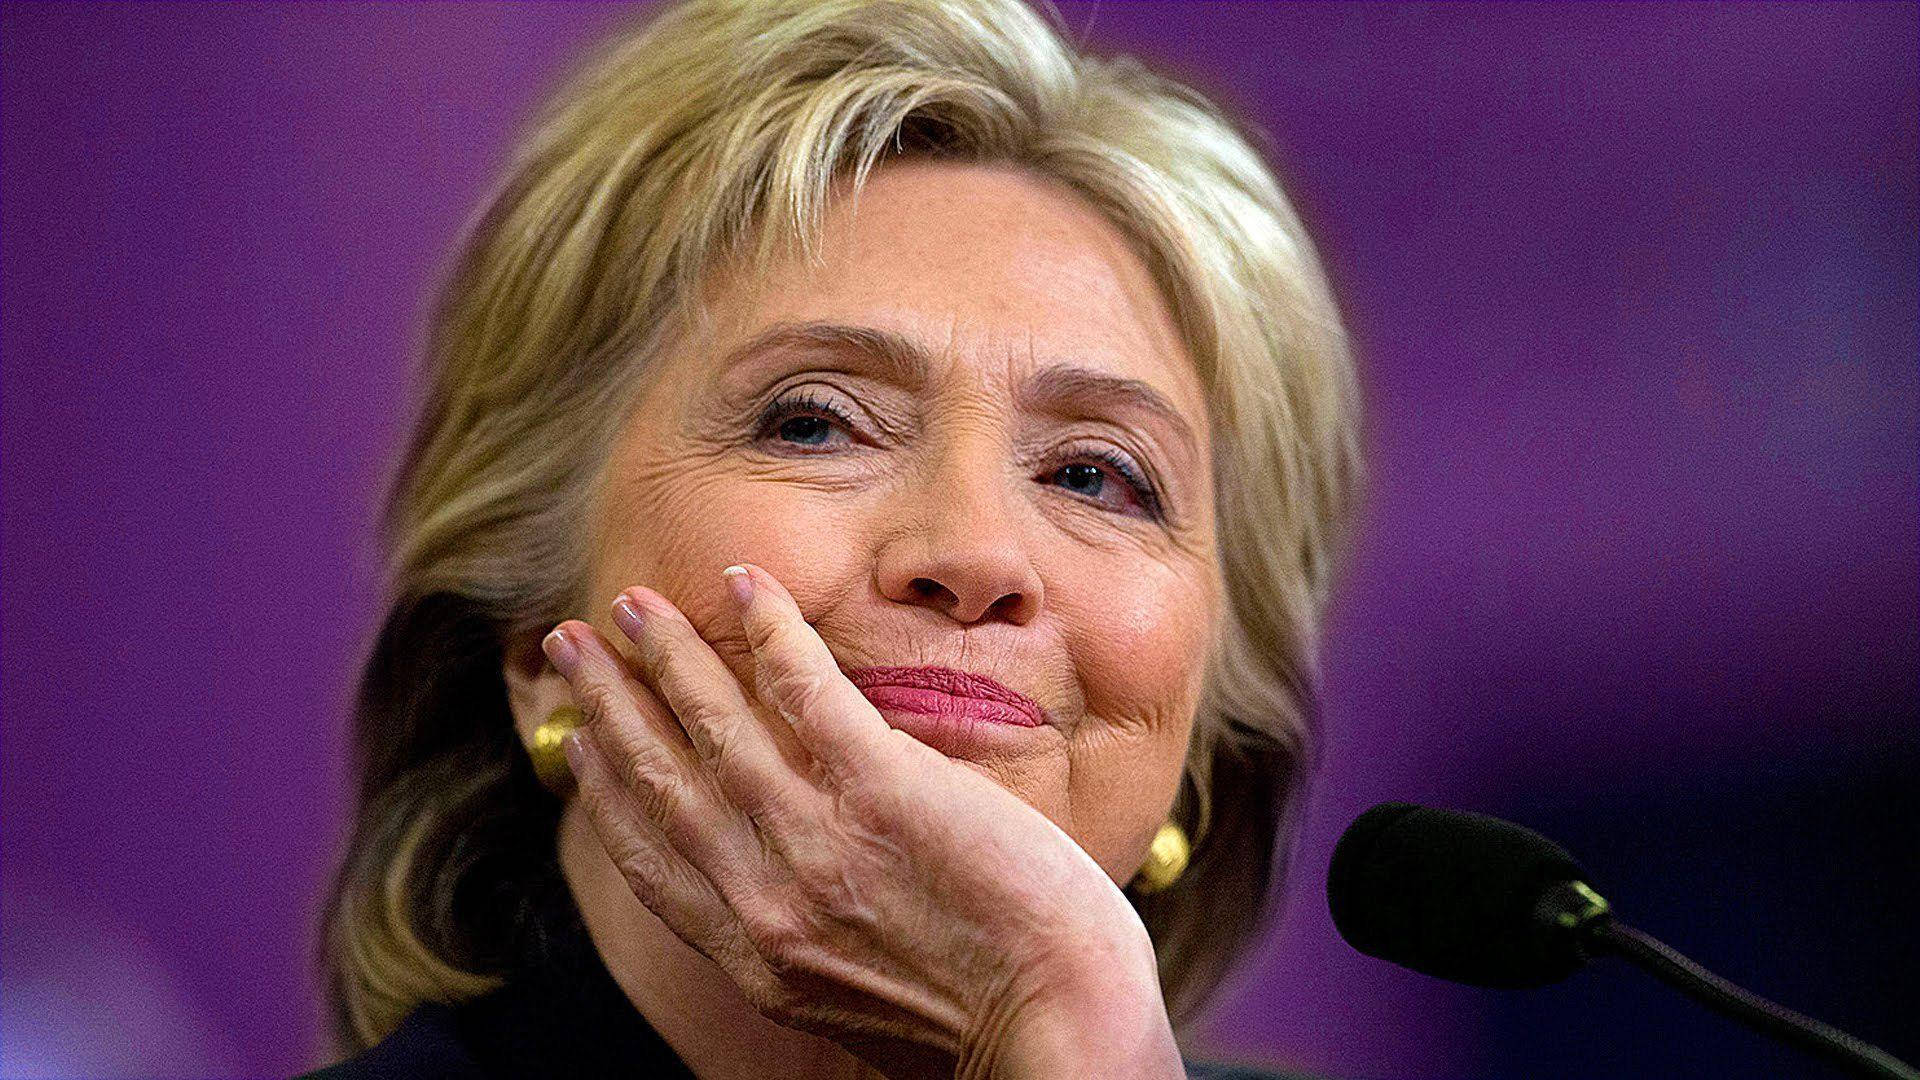 Hillary Clinton Smiling Candid Portrait